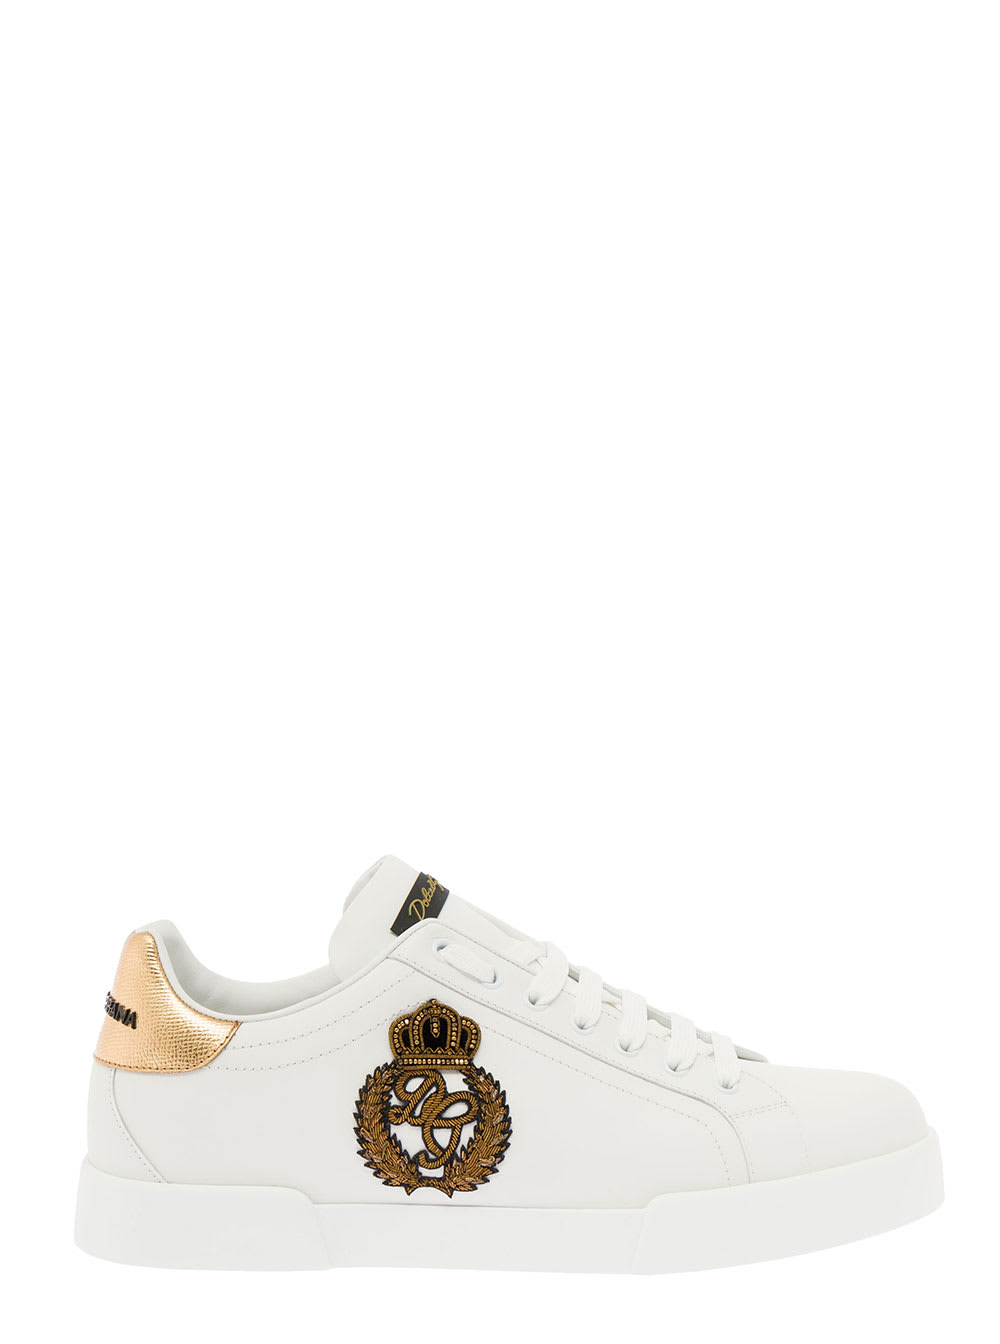 Dolce & Gabbana Mans Portofino White Leather Sneaker With Logo Detail